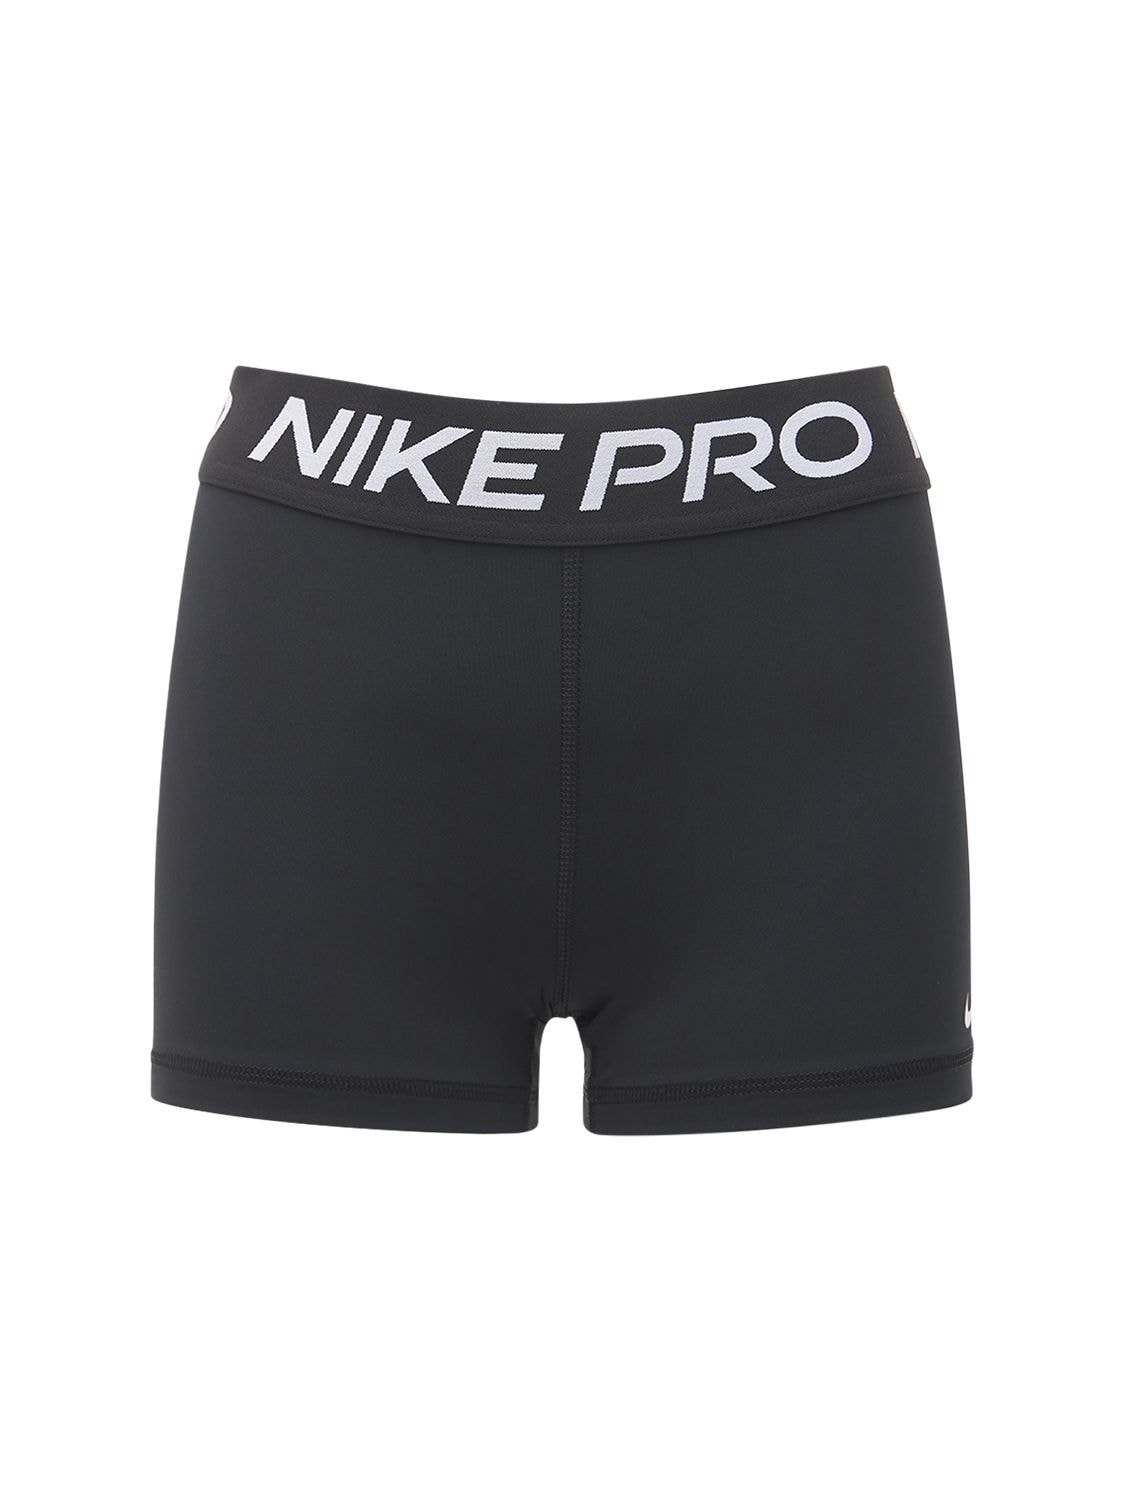 Nike Pro Shorts In Black